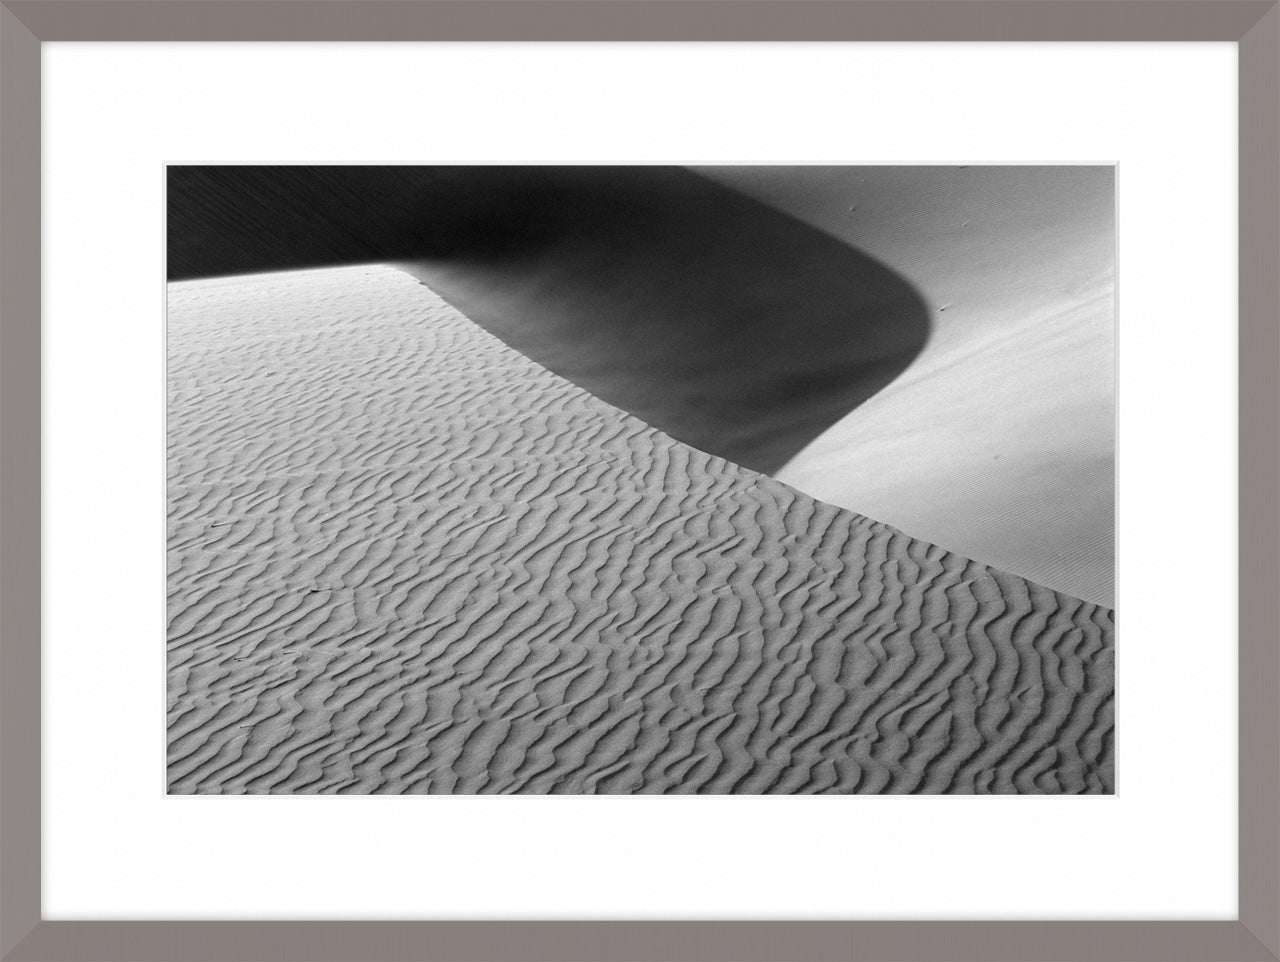 Sand Dunes I, 1994